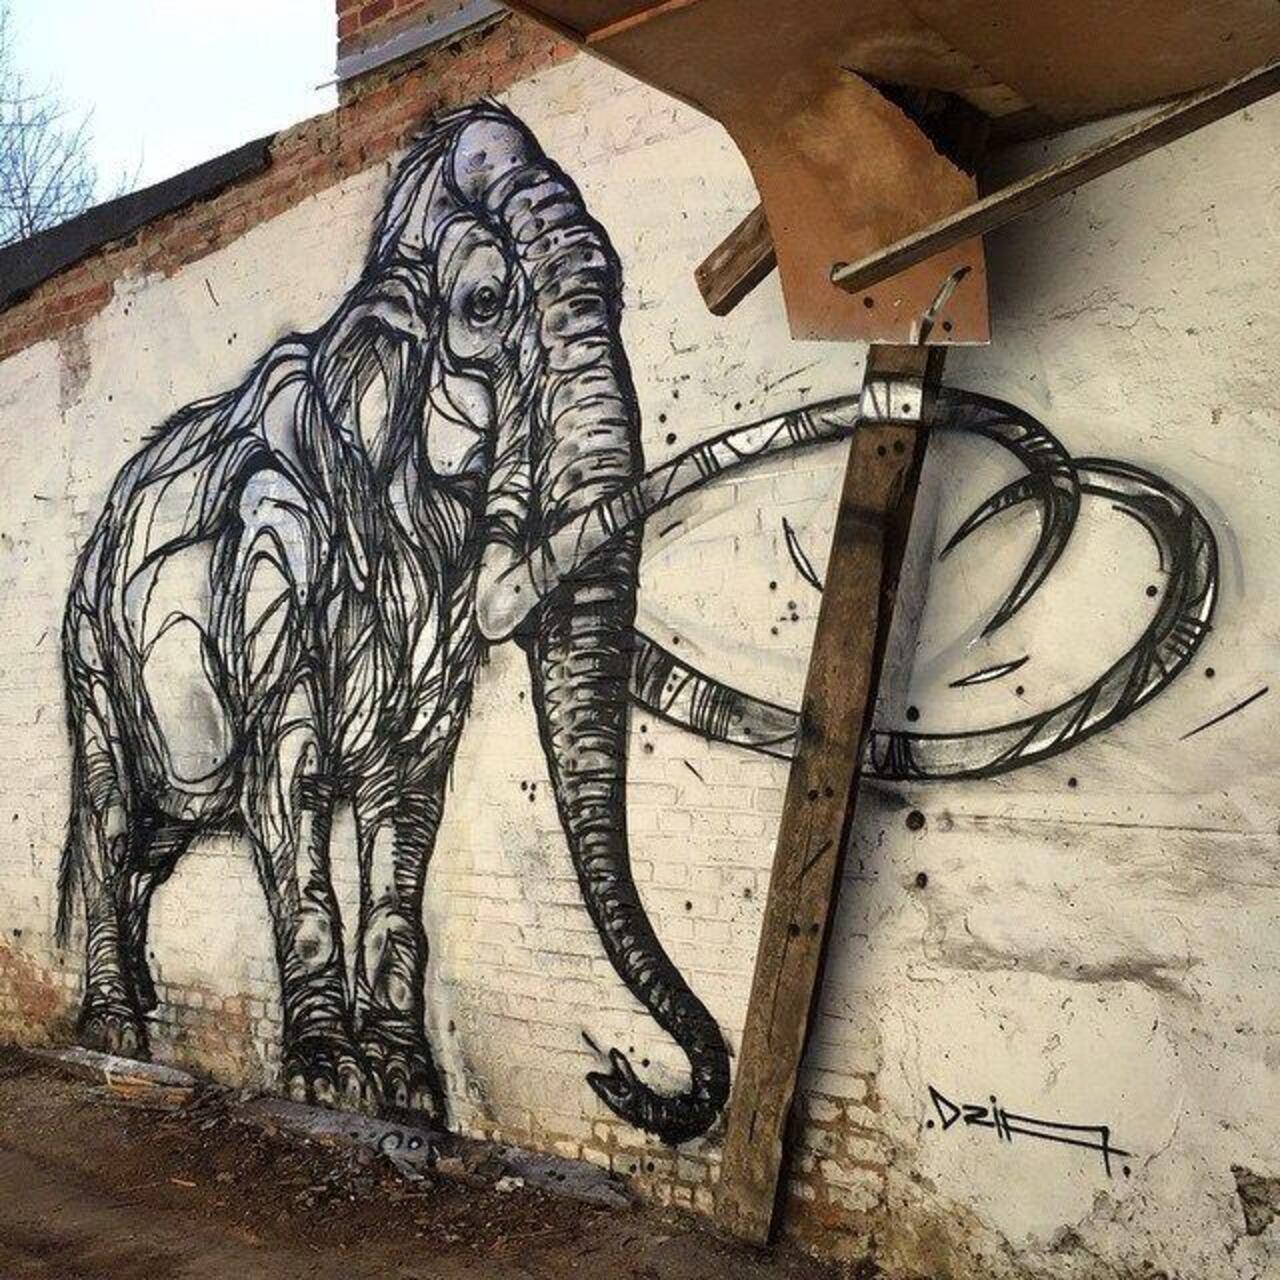 RT @GoogleStreetArt: Mammoth. New nature in Street Art wall by DZIA 

#art #graffiti #mural #streetart http://t.co/rlMm9gmNVd